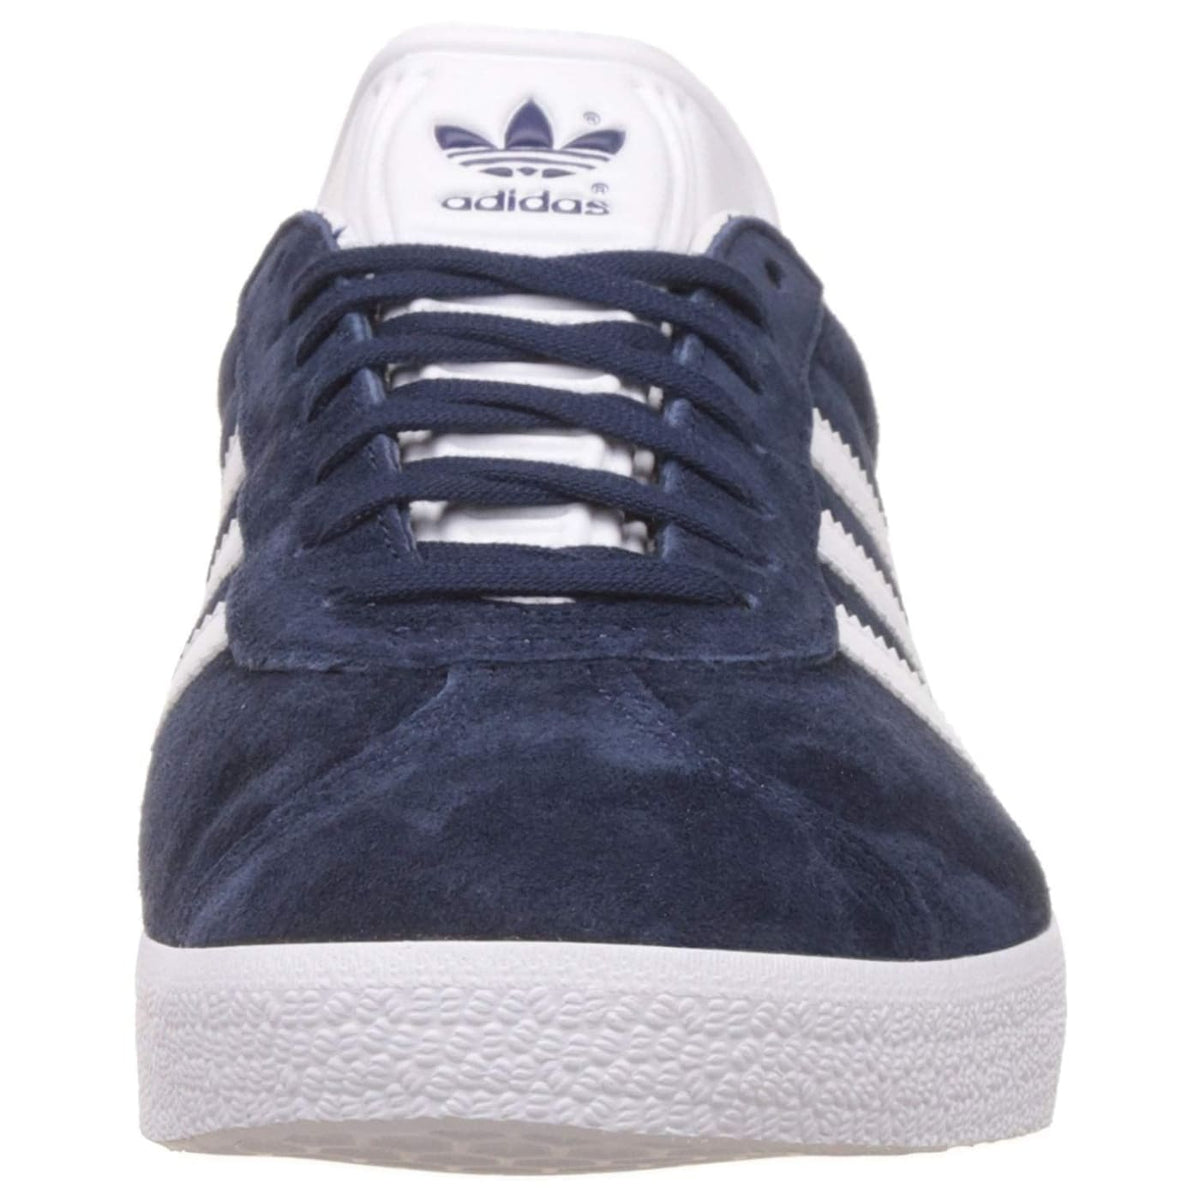 Adidas Original Gazelle Mens Suede Trainers – Top Brand Shoes